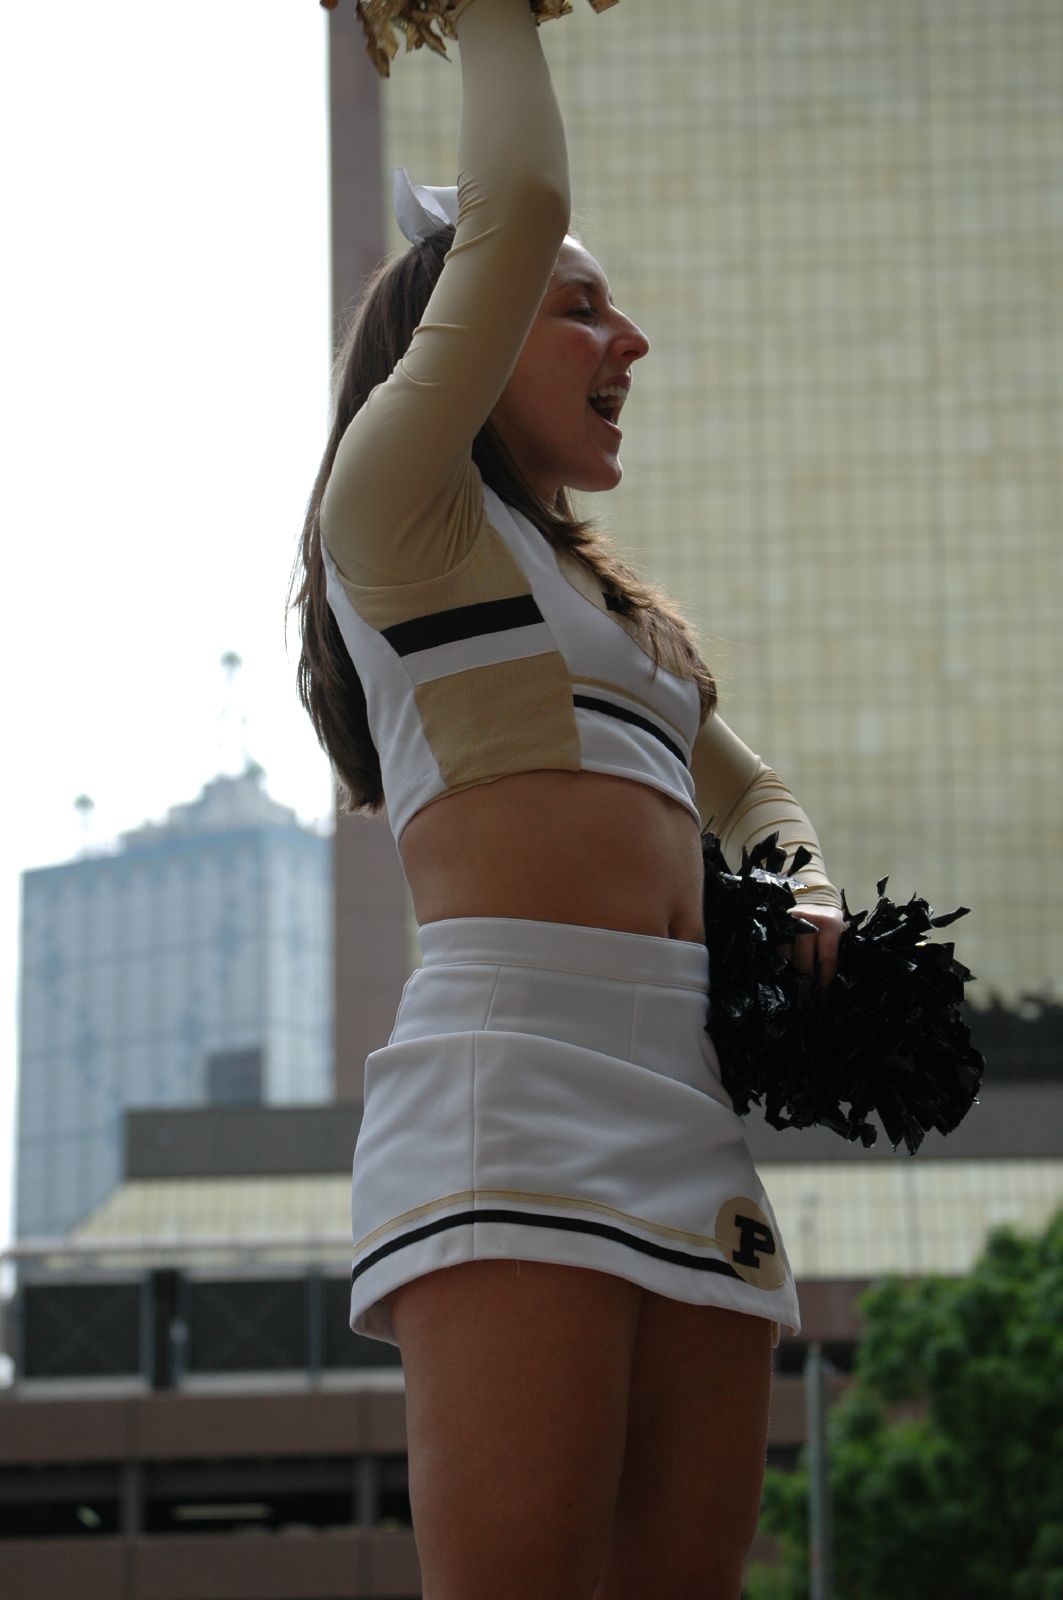 cheerleader in white uniform holds up her pom - poms